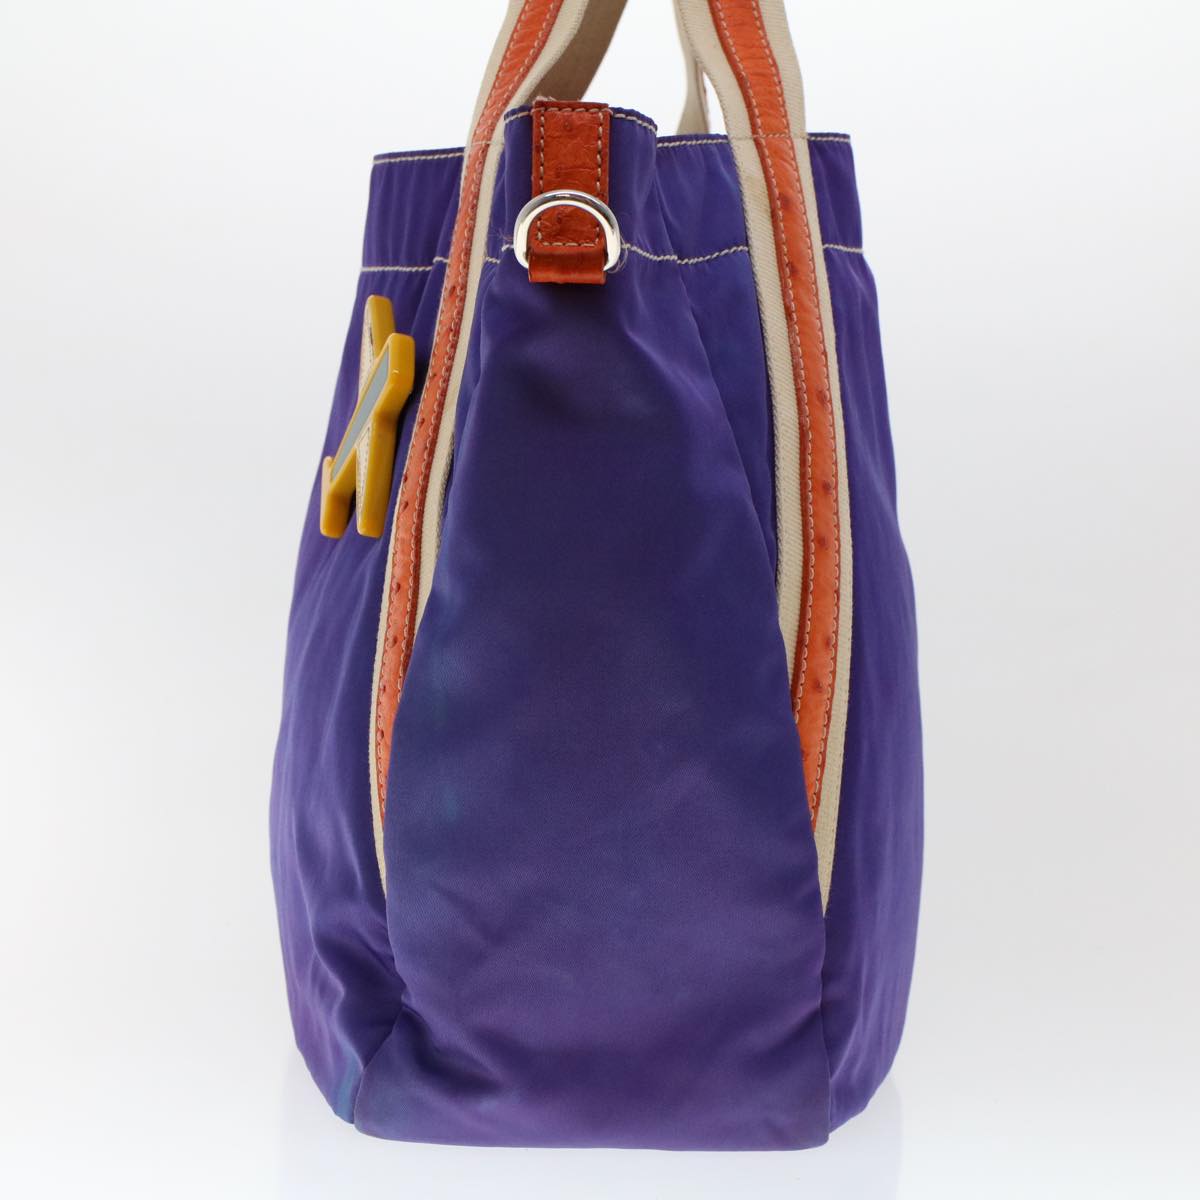 PRADA Tote Bag Nylon Purple Orange Auth bs6261